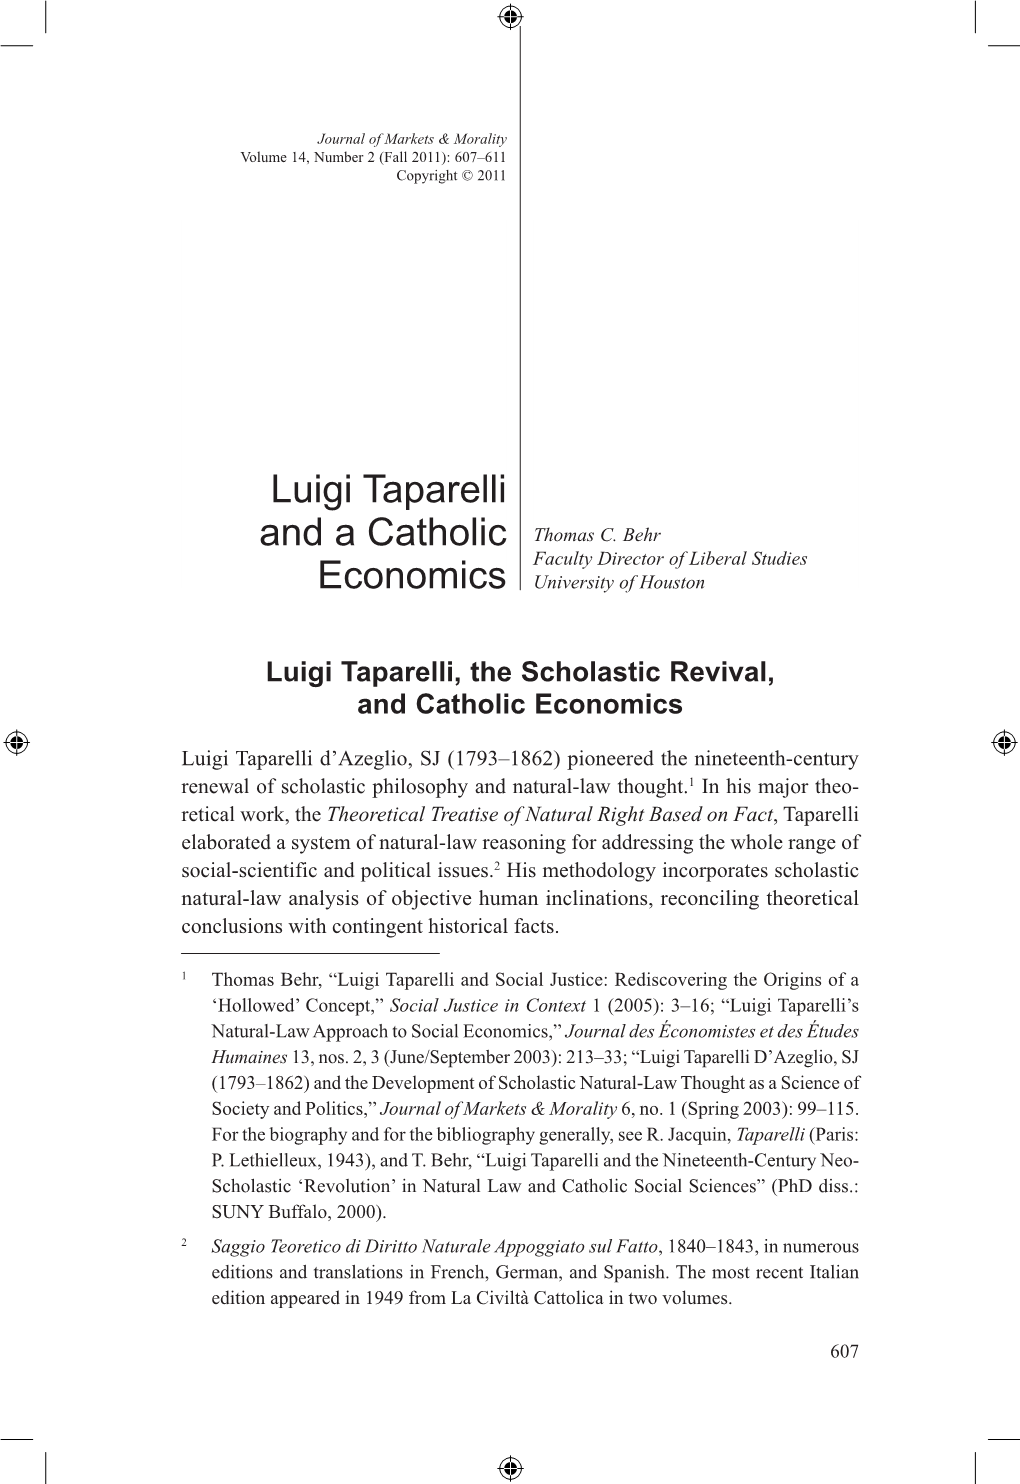 Luigi Taparelli and a Catholic Economics